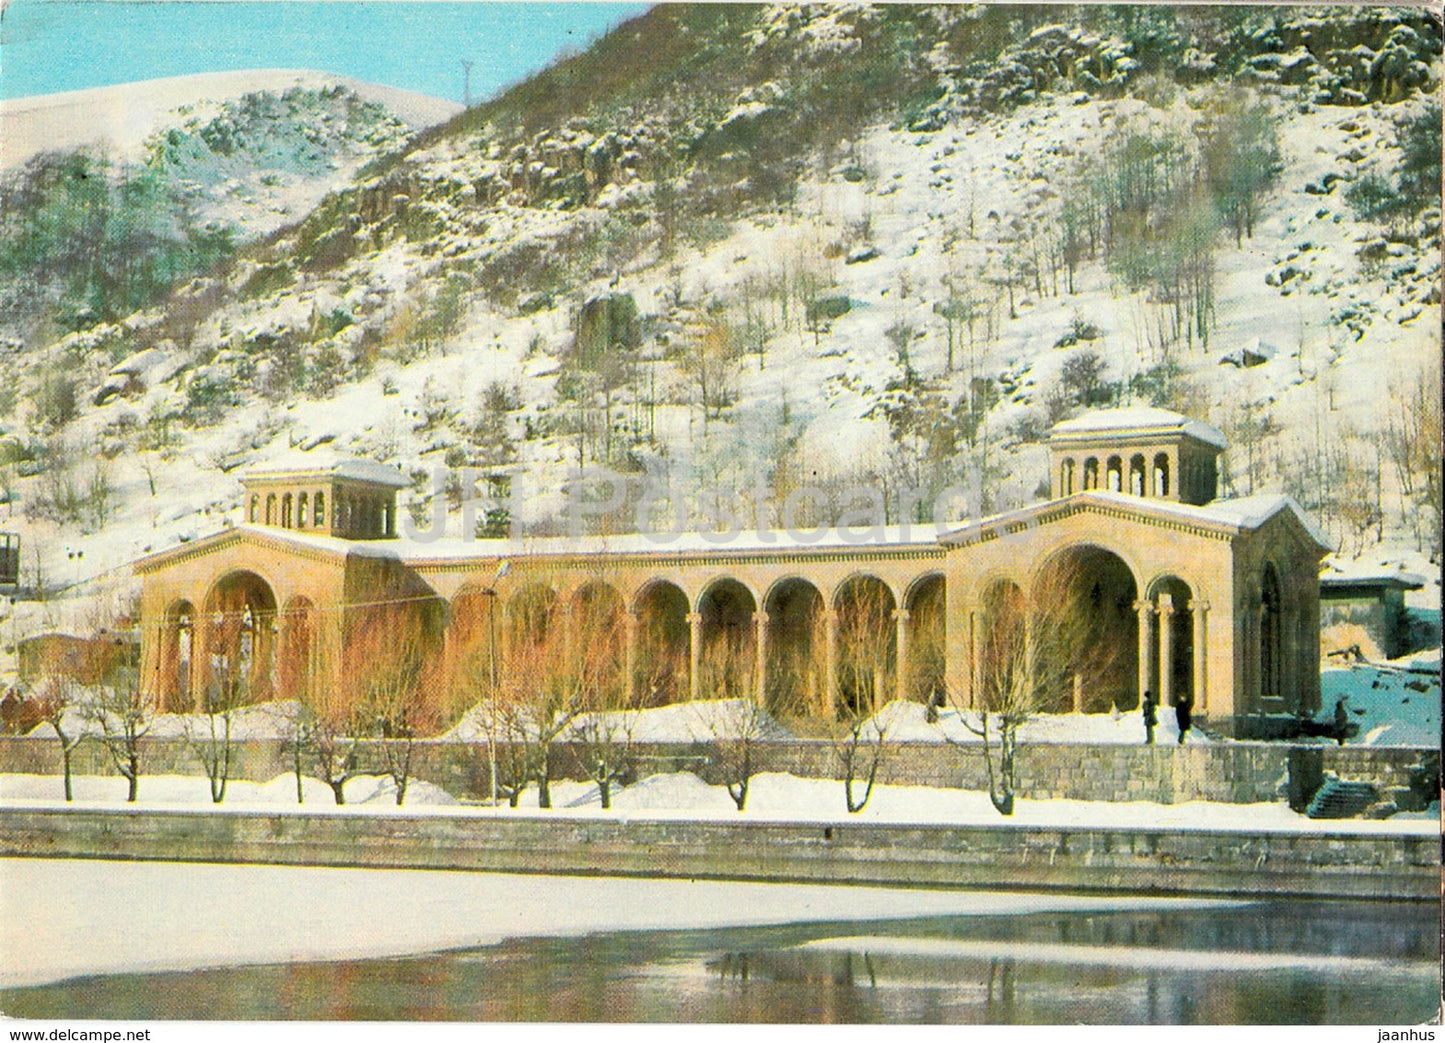 Jermuk Resort - Drinking Gallery - postal stationery - 1978 - Armenia USSR -  unused - JH Postcards